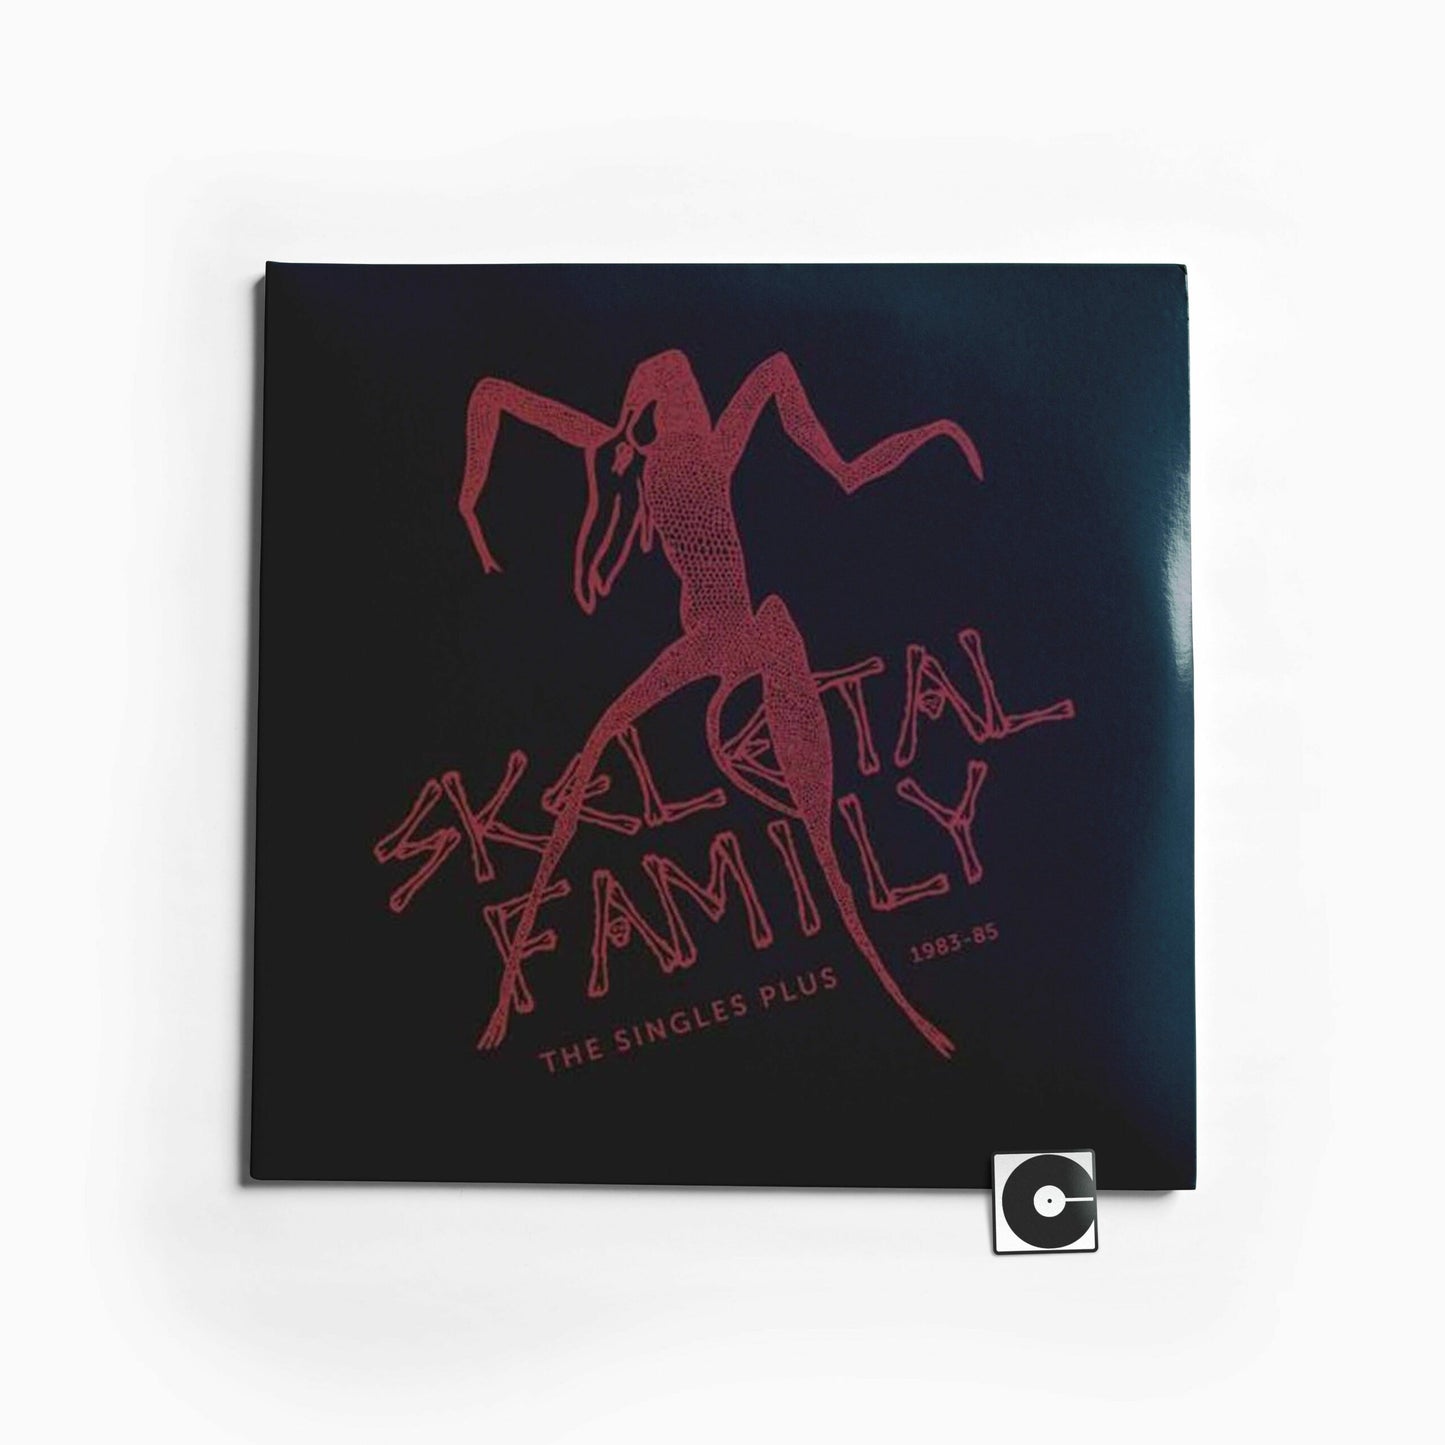 Skeletal Family - "The Singles Plus 1983-85"